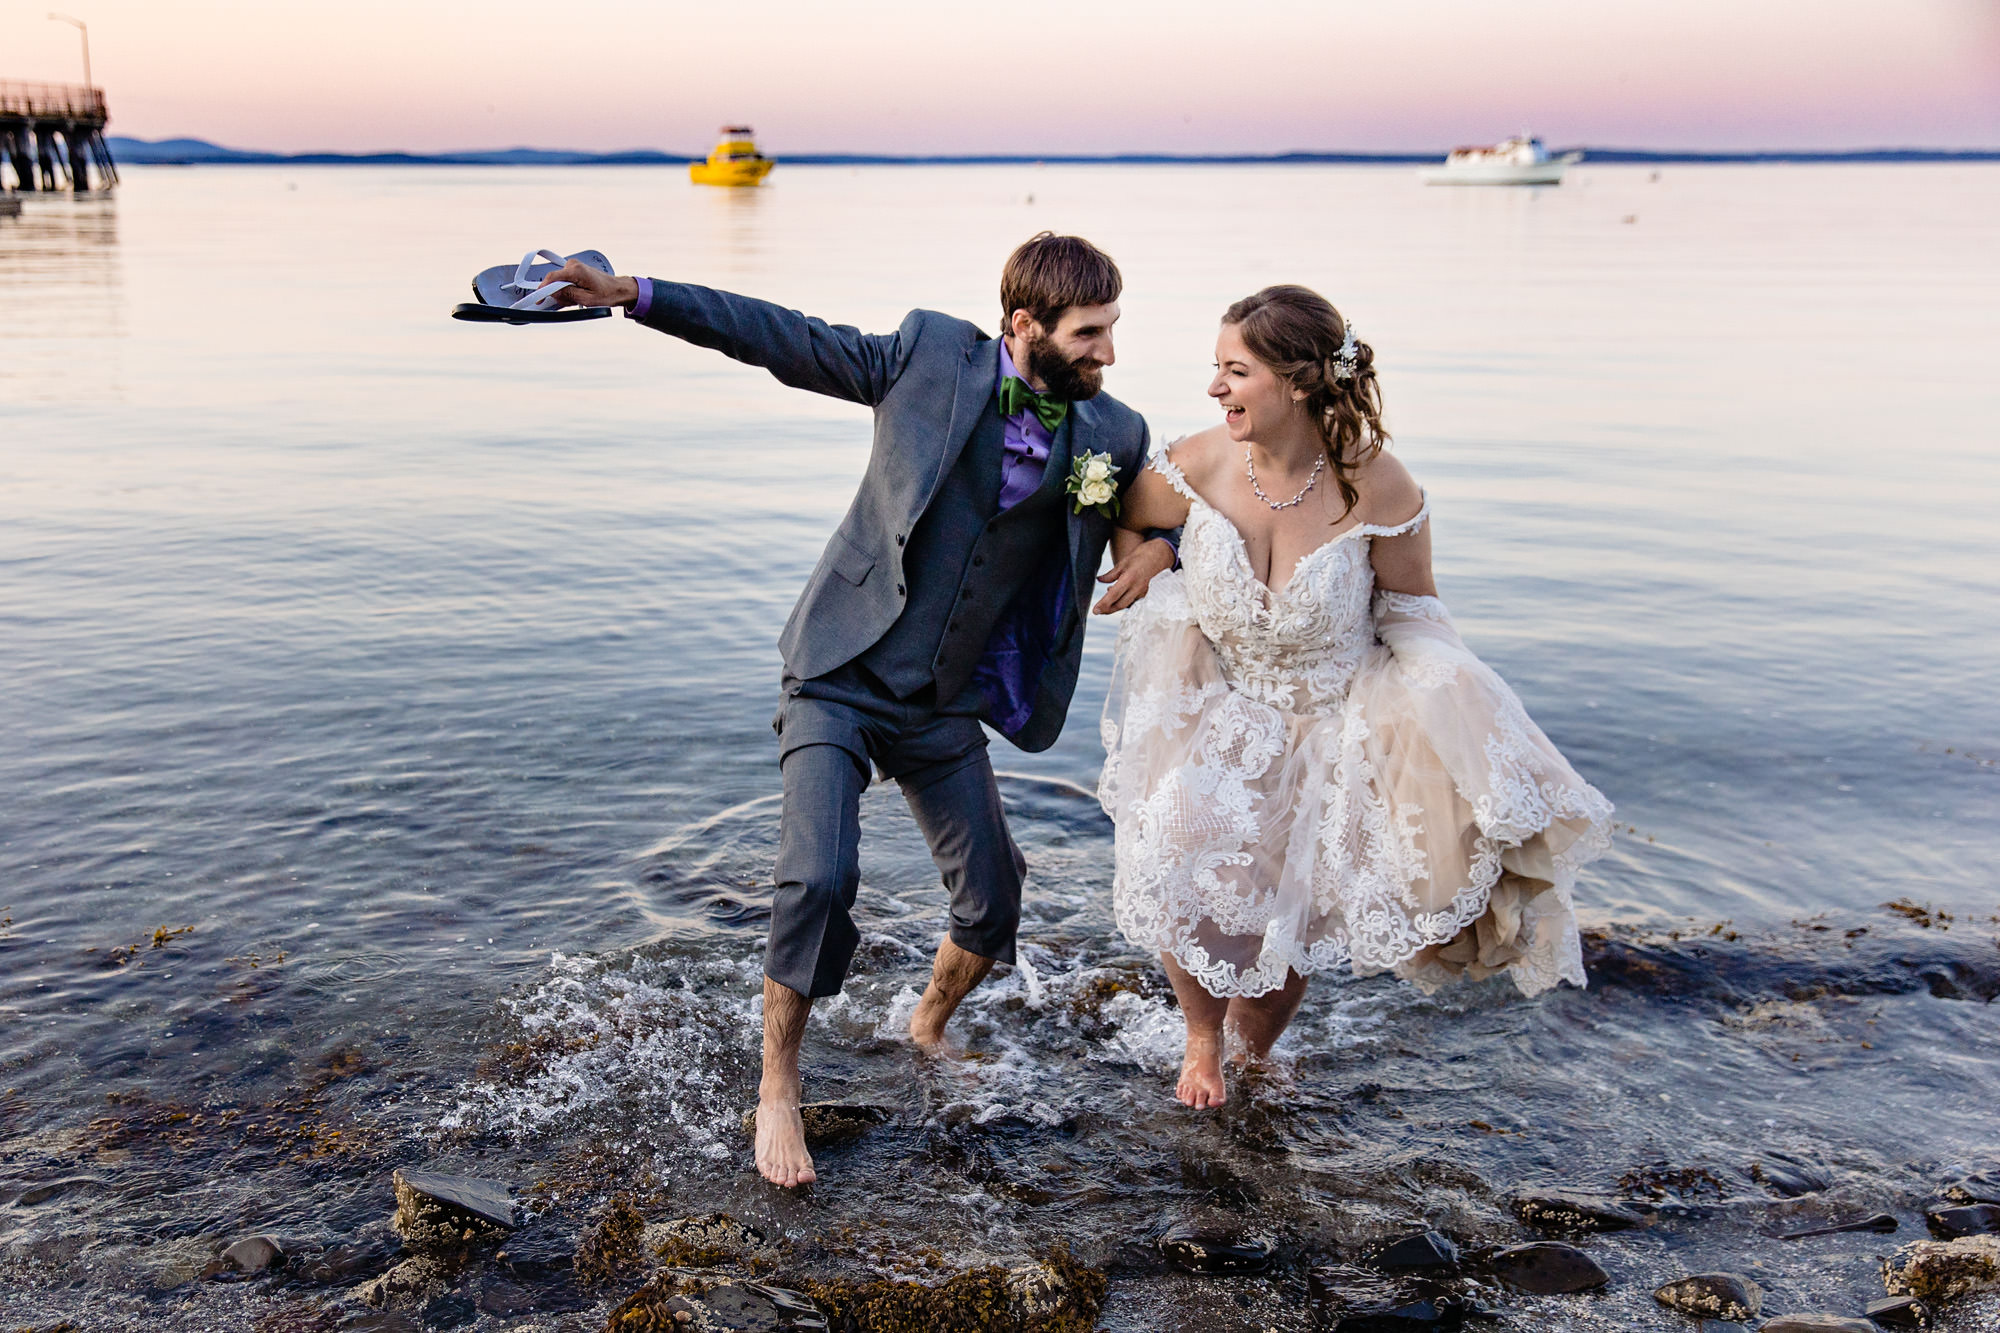 Sunset wedding portraits taken in Bar Harbor, Maine